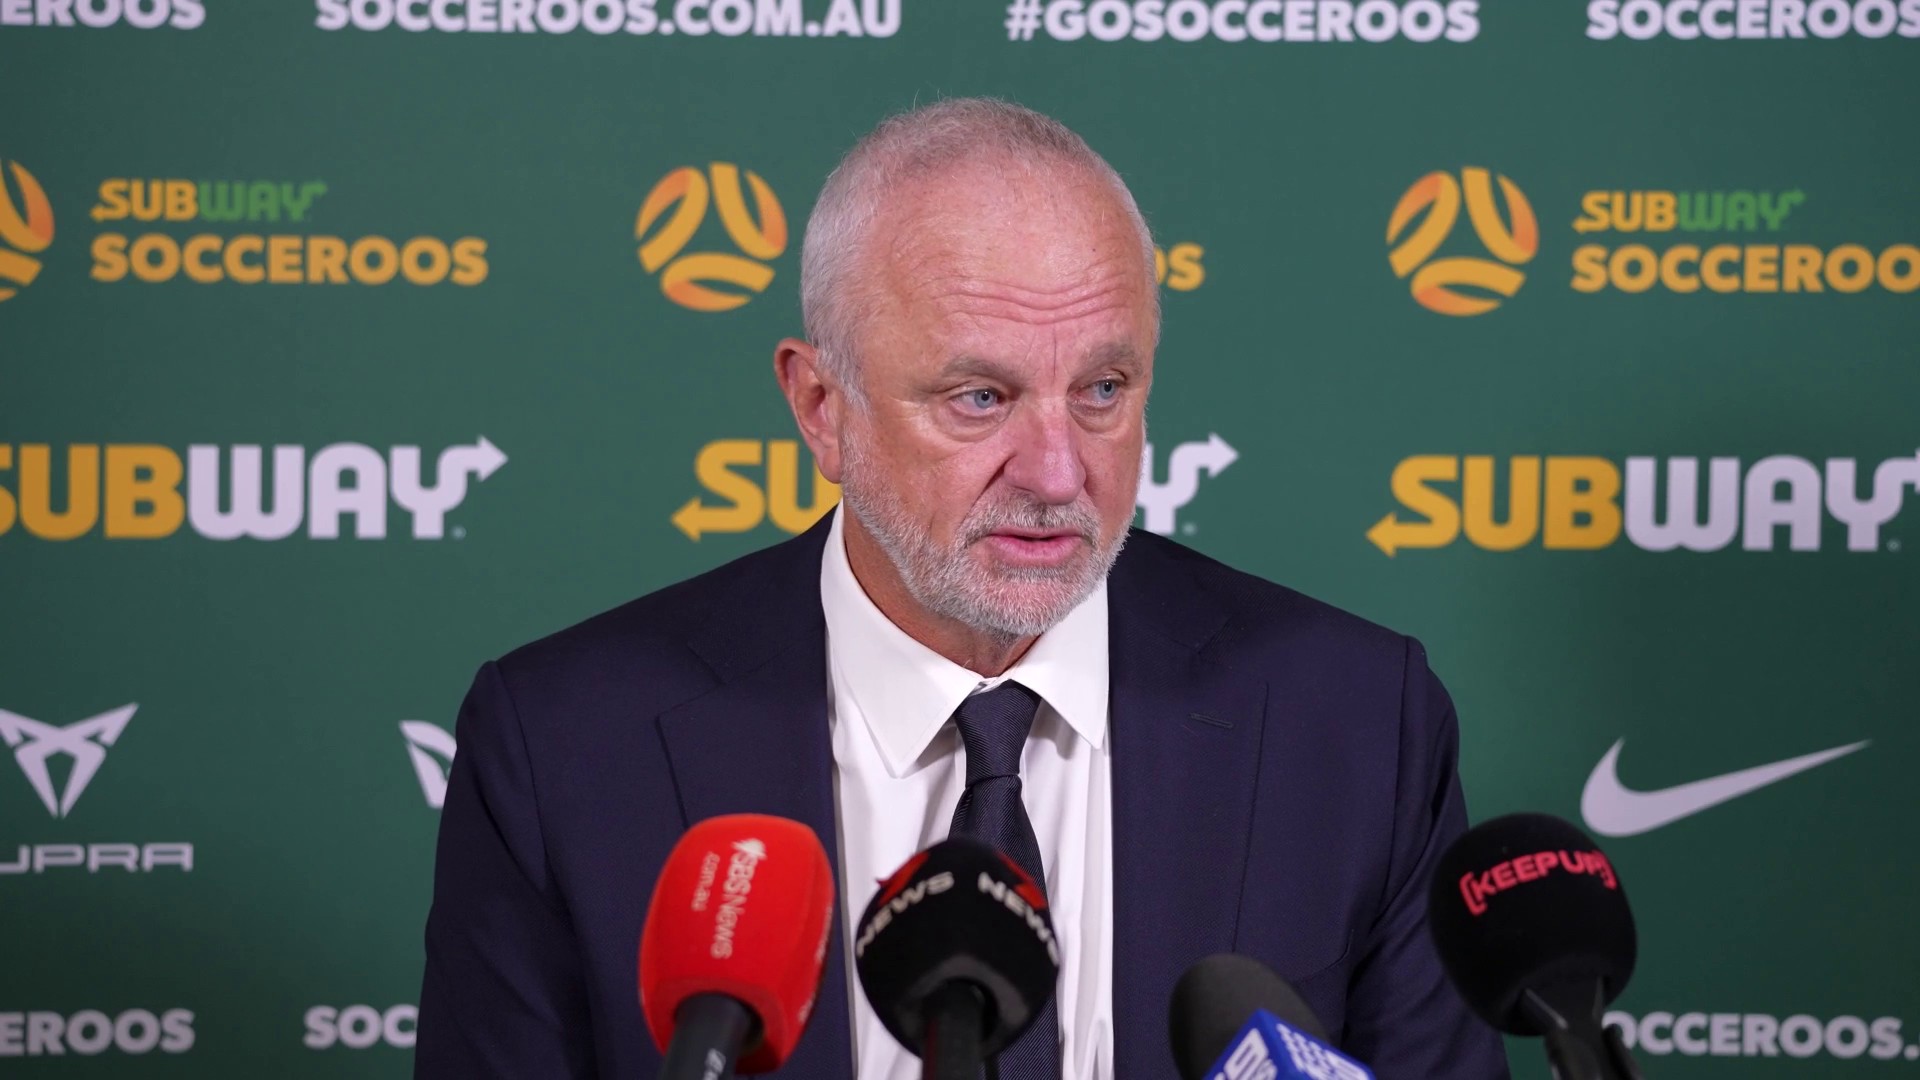 Socceroos coach Graham Arnold press conference